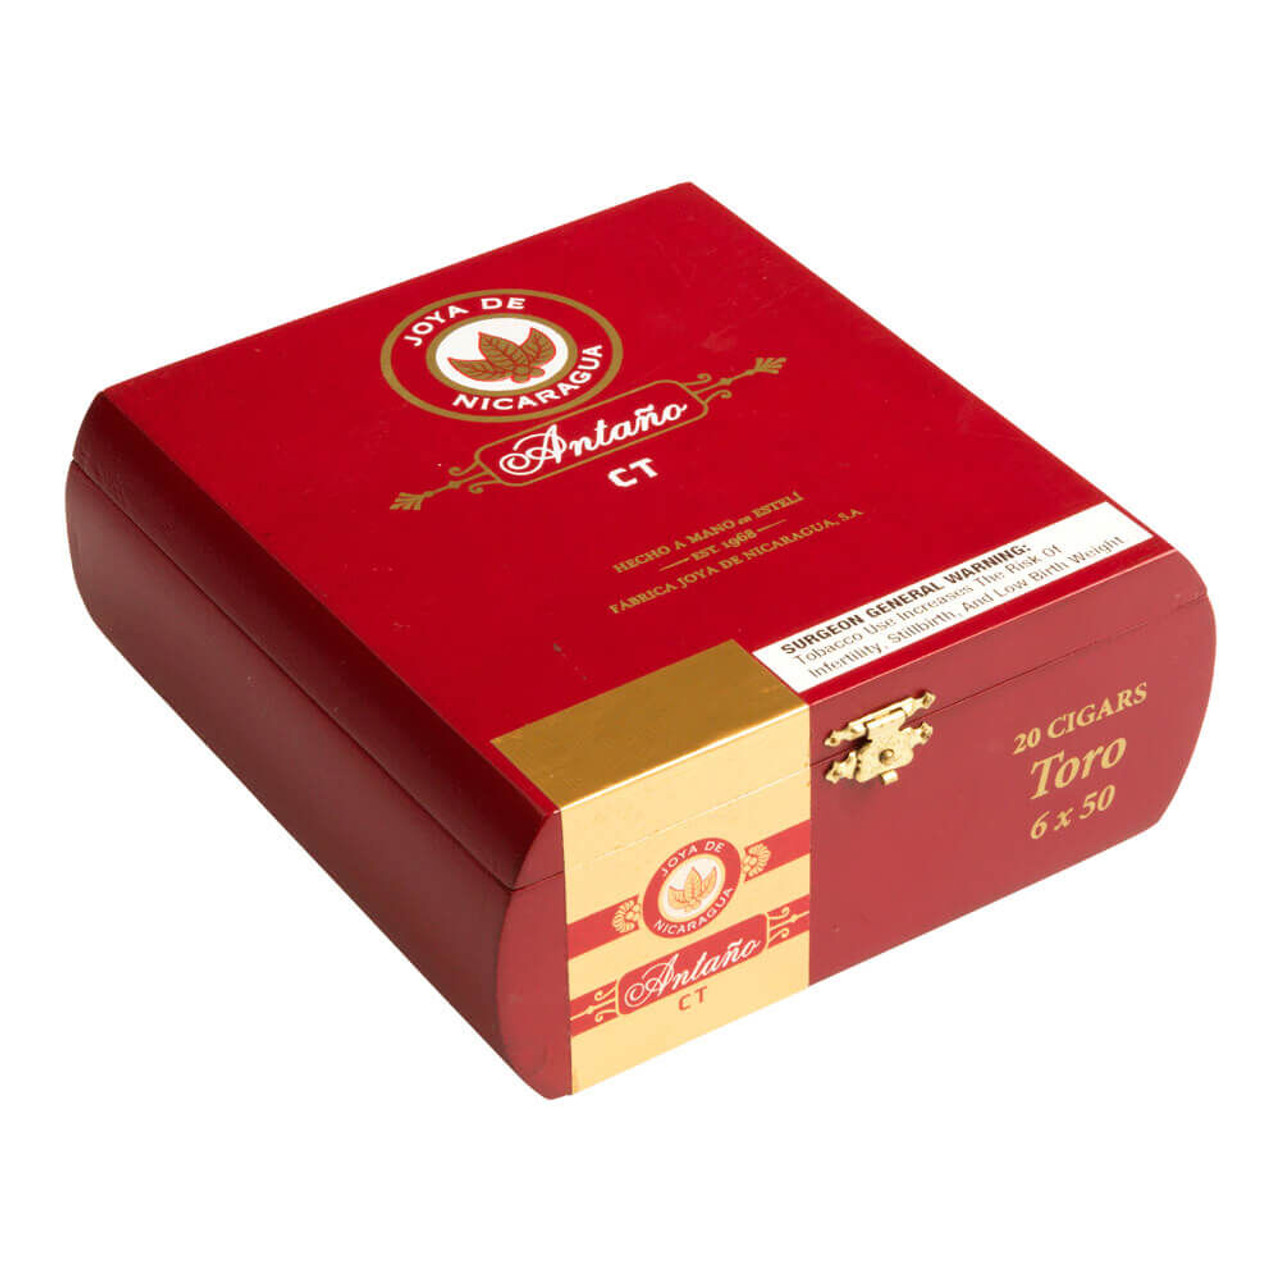 Joya de Nicaragua Antano Connecticut Toro Cigars - 6 x 50 (Box of 20) *Box